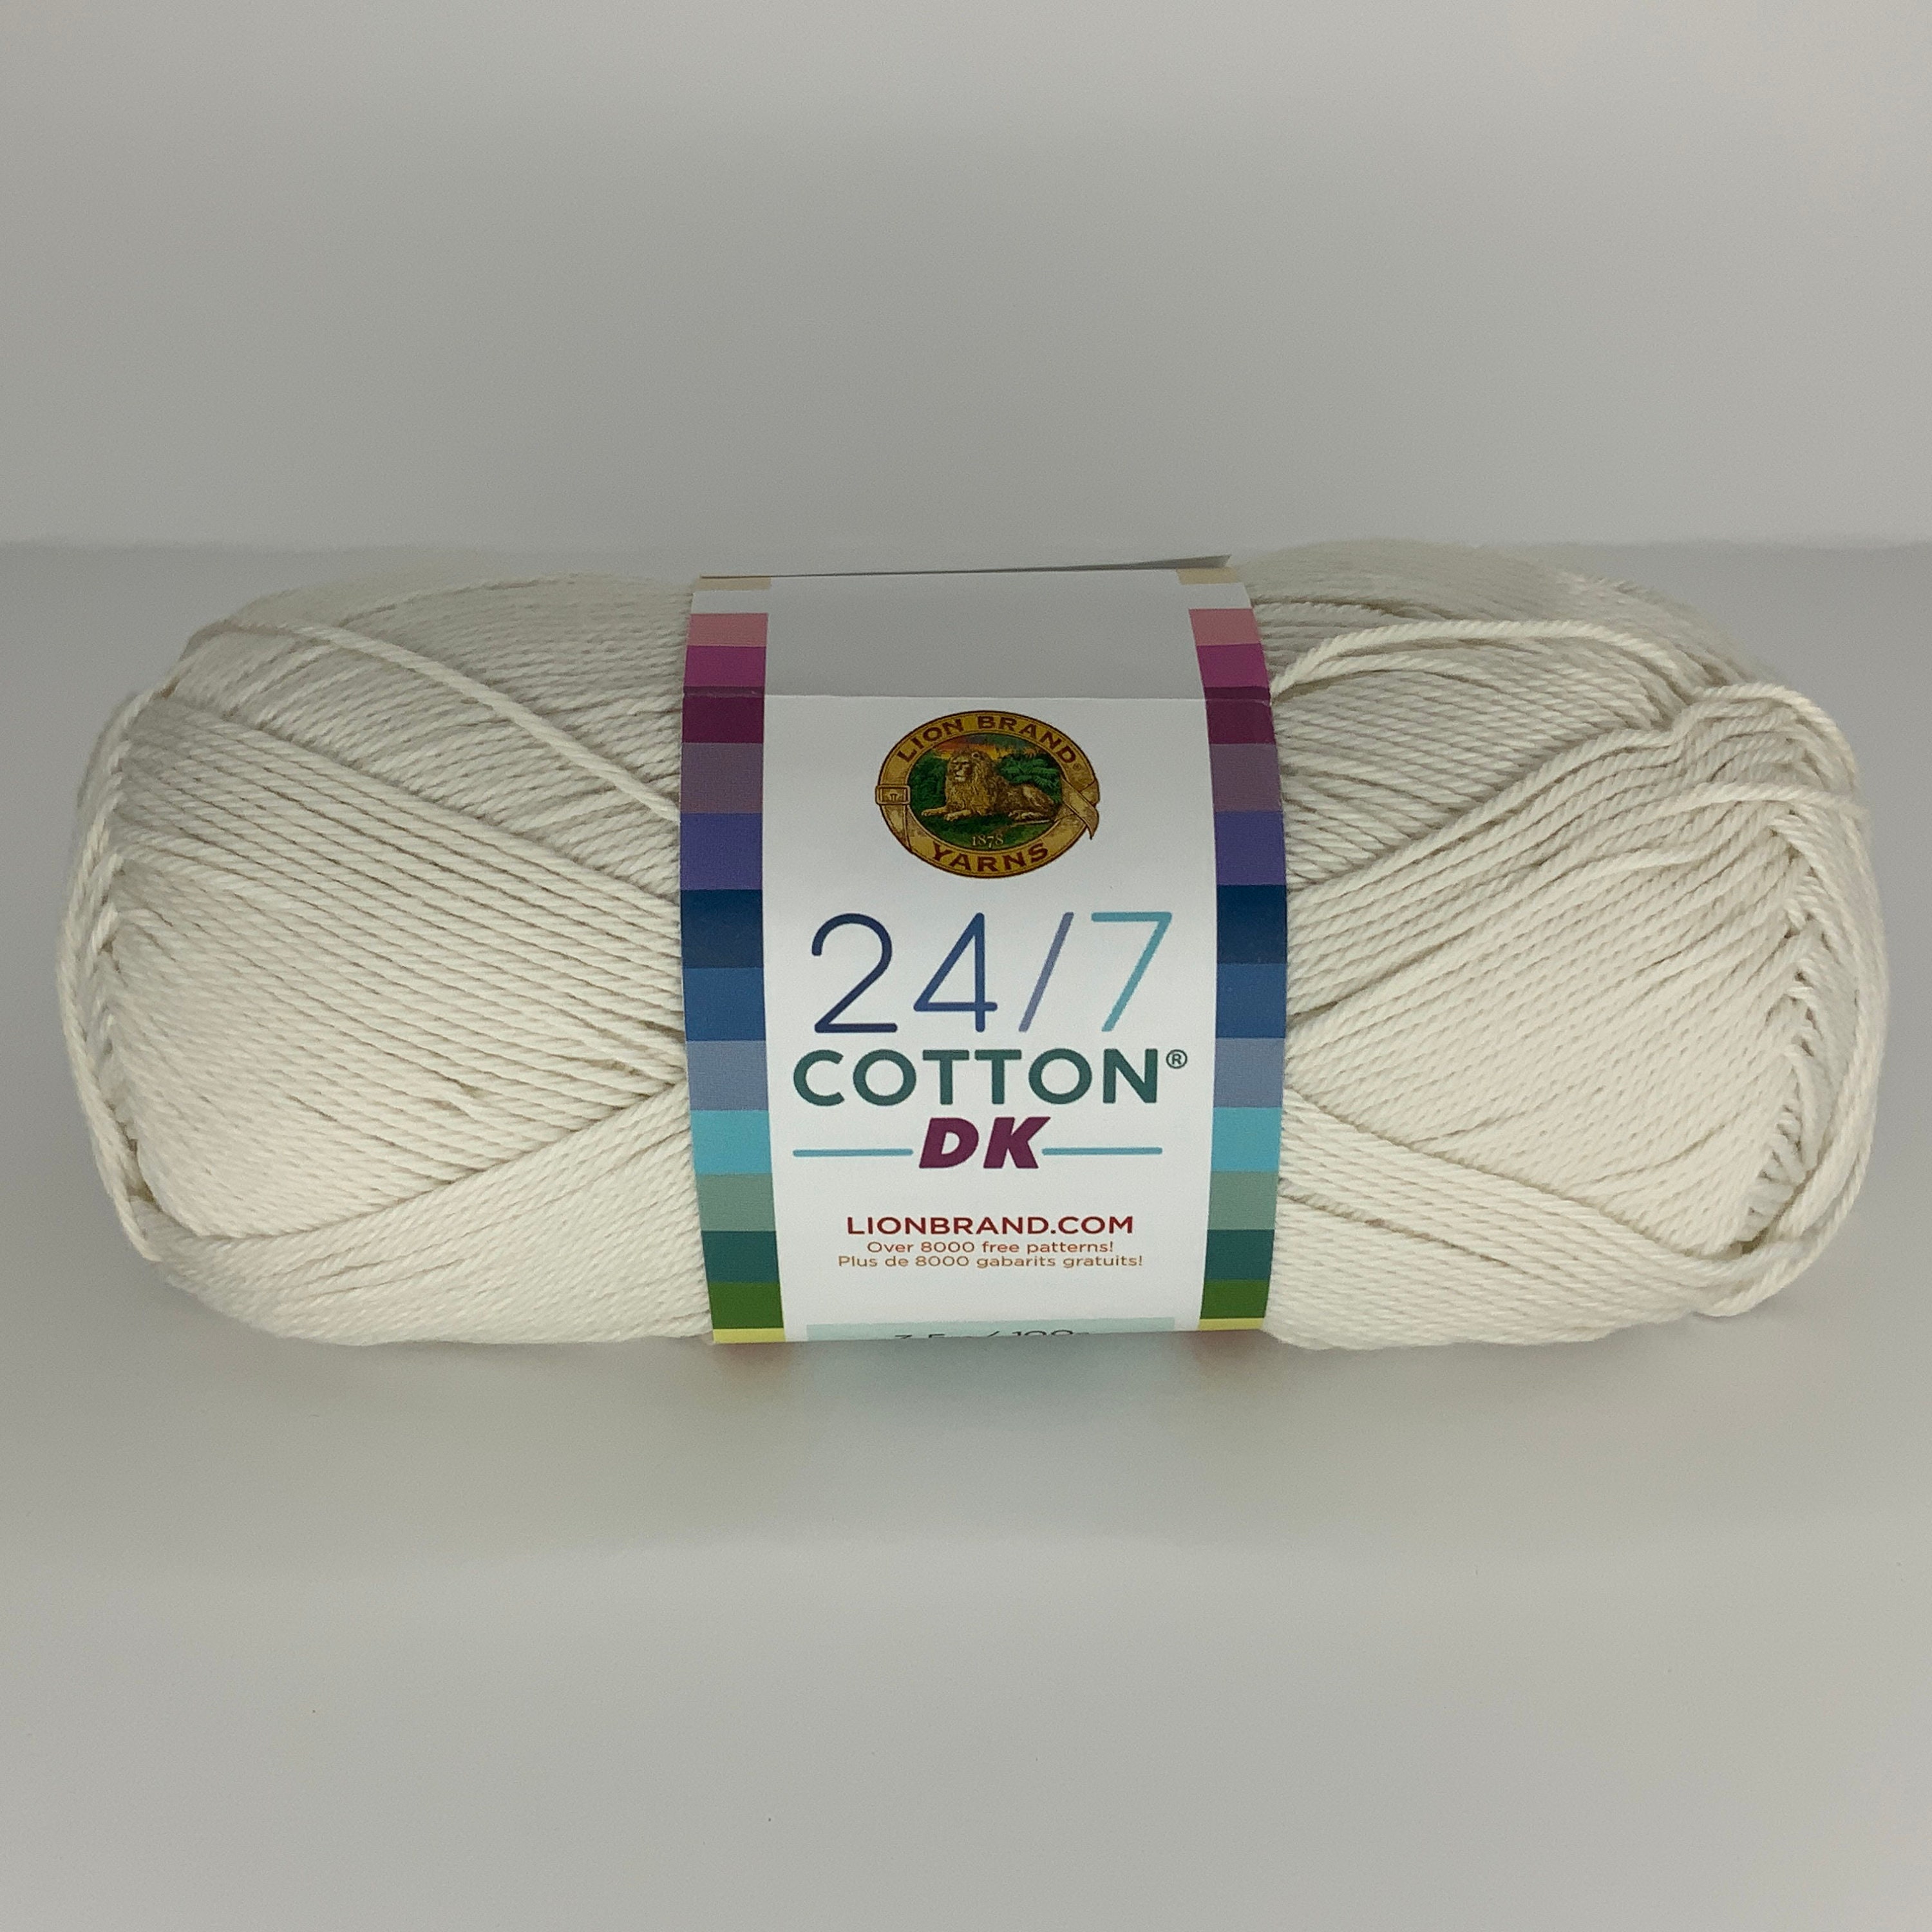 Paintbox METALLIC DK Yarn #4 PINA COLADA LUMINOUS DK Cotton Blend 50 Grams